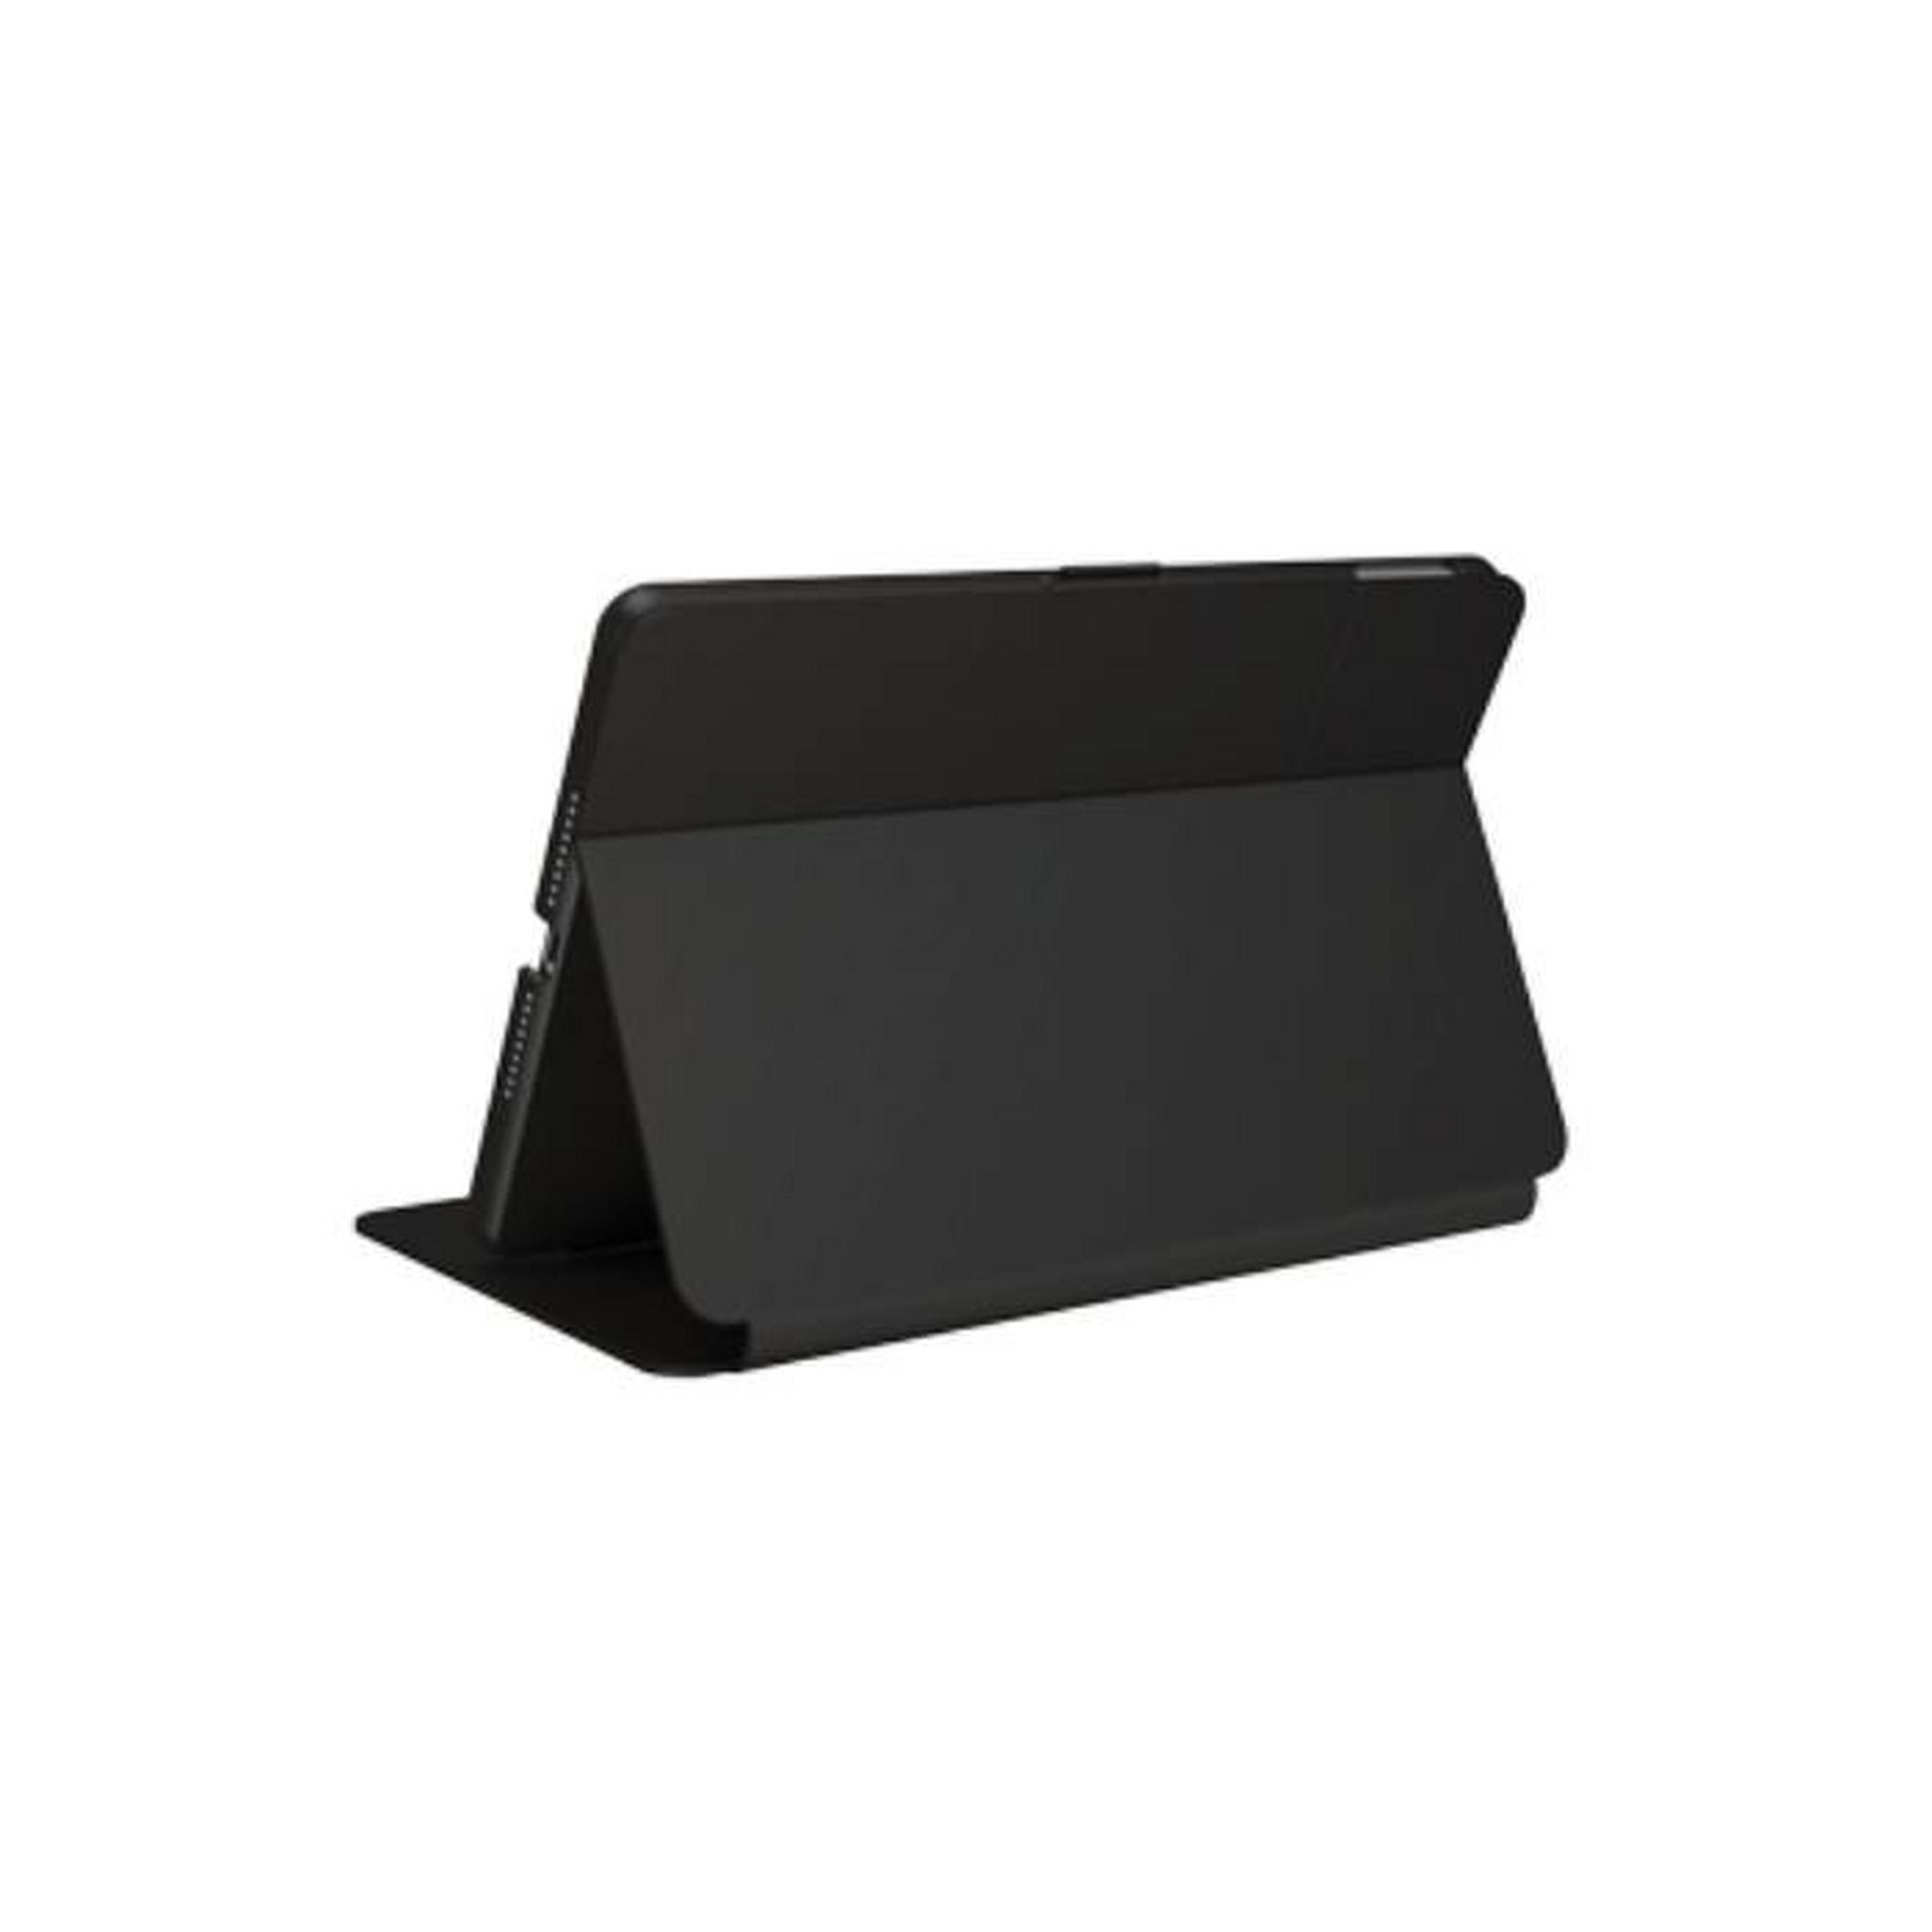 Speck Balance Folio 10.2-inch iPad Case - Black